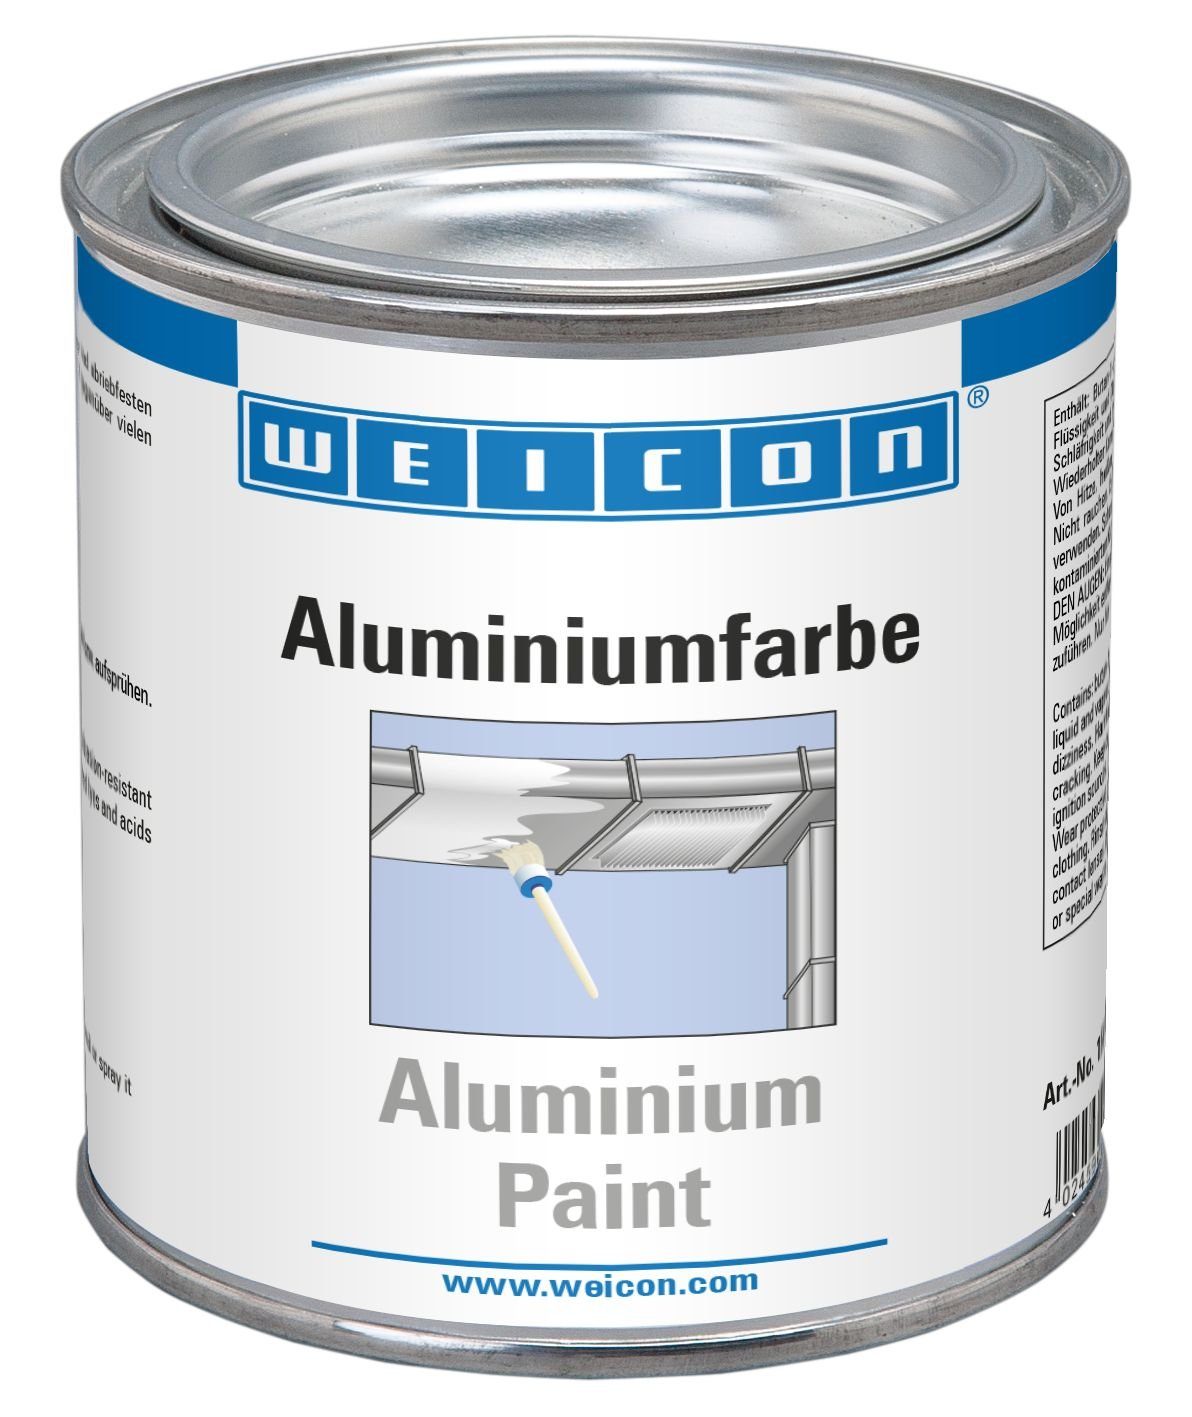 aus Korrosionsschutz WEICON Metallglanzfarbe Aluminiumpigmentbeschichtung Aluminiumfarbe,